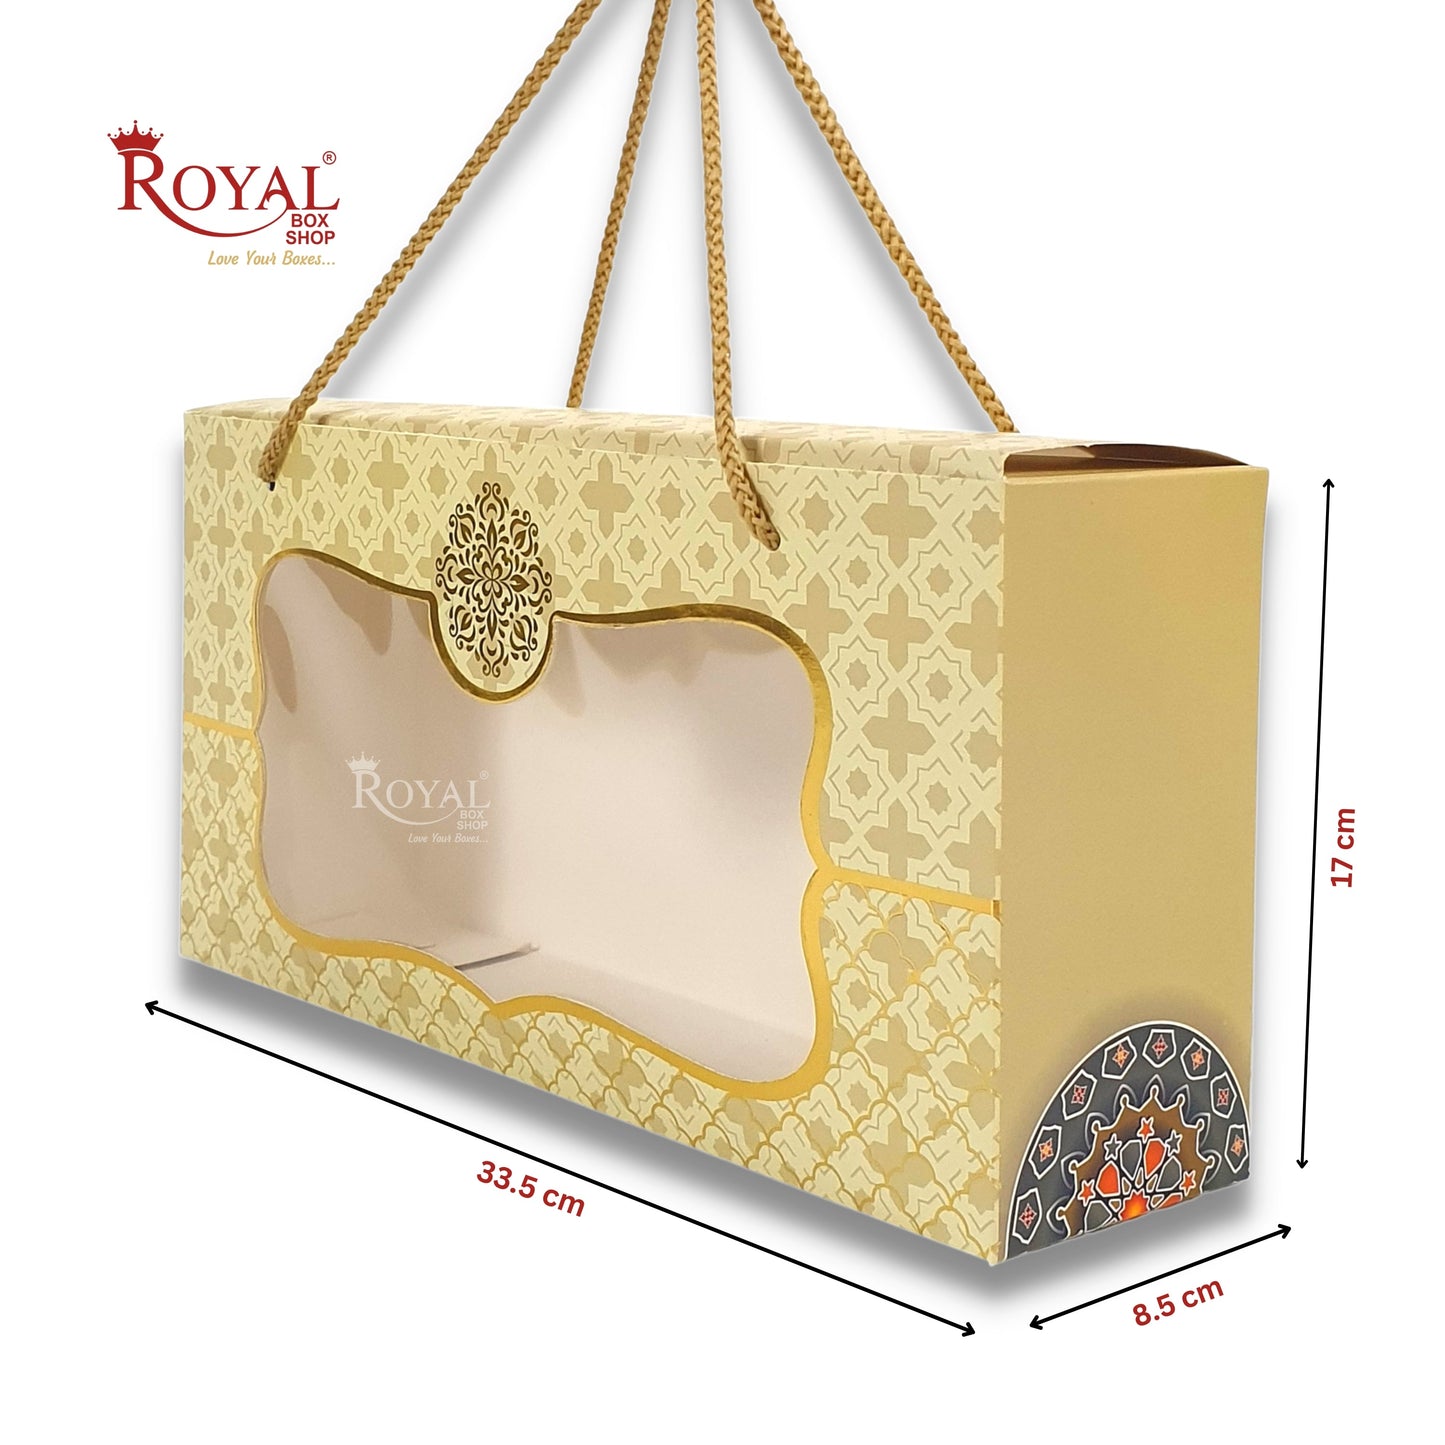 4 Pet Jar Gift Hamper Bags I 33.5 x 17 x 8.5 CM I Royal Beige I Diwali Gifting, Party Gifts, Return favor Gifting Royal Box Shop